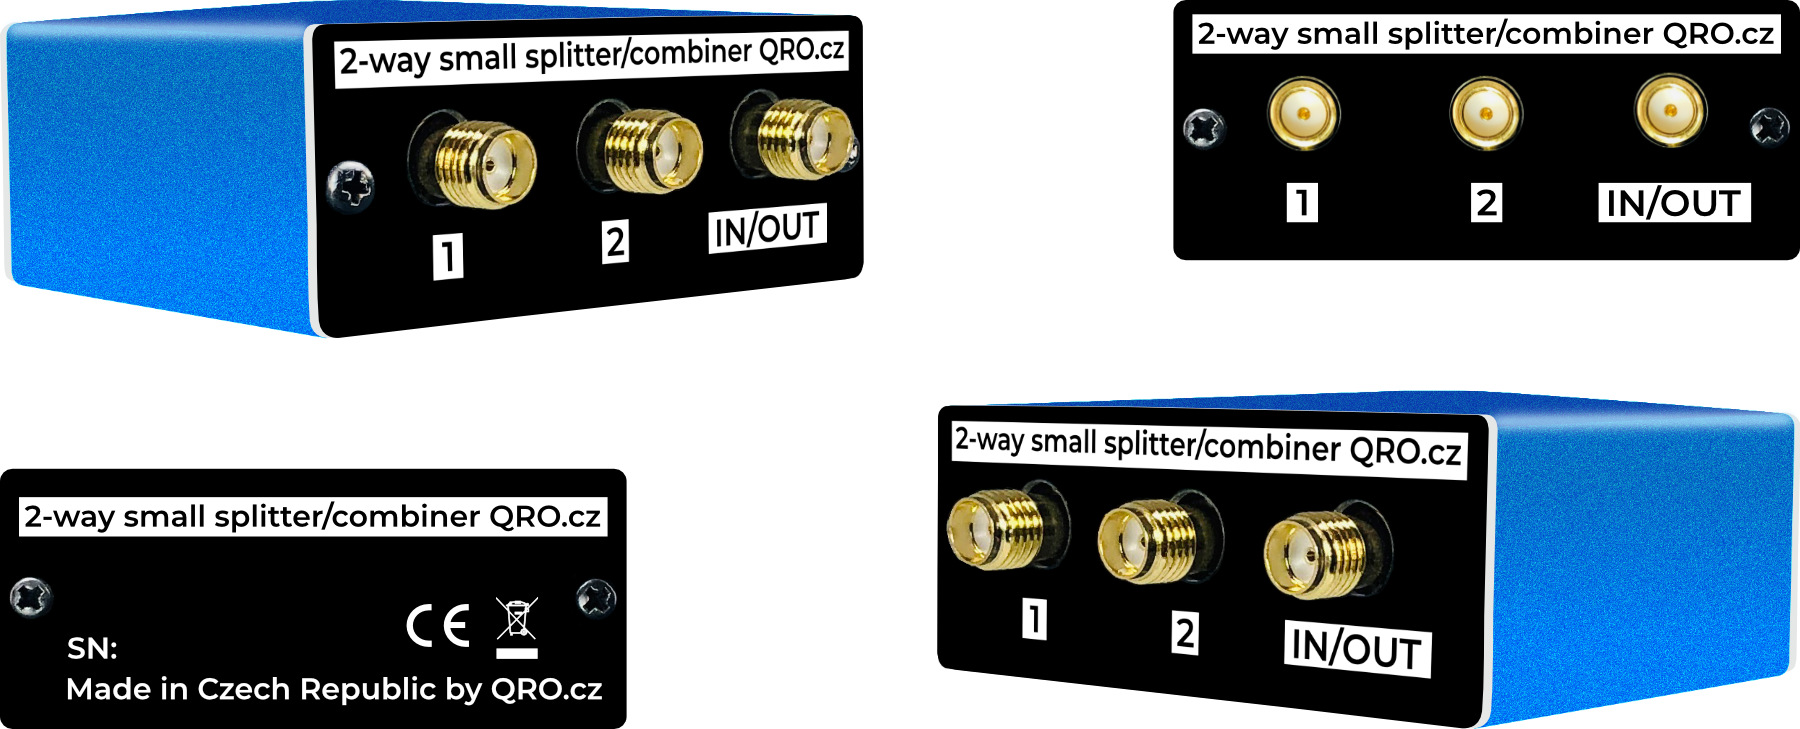 2-way small splitter combiner in box assembled qro.cz hamparts.shop